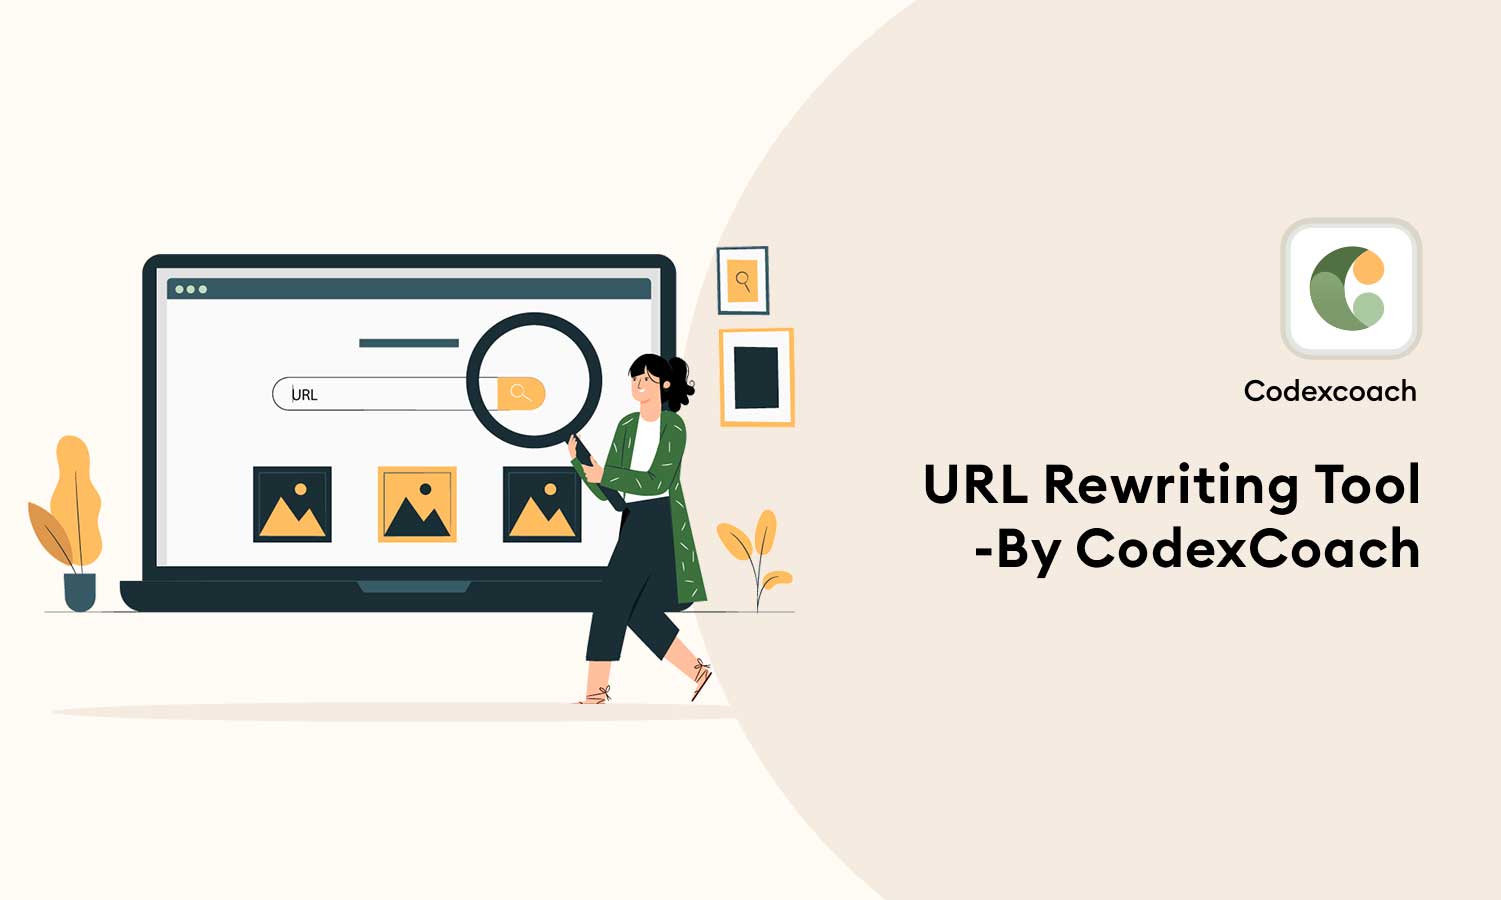 URL rewriting tool